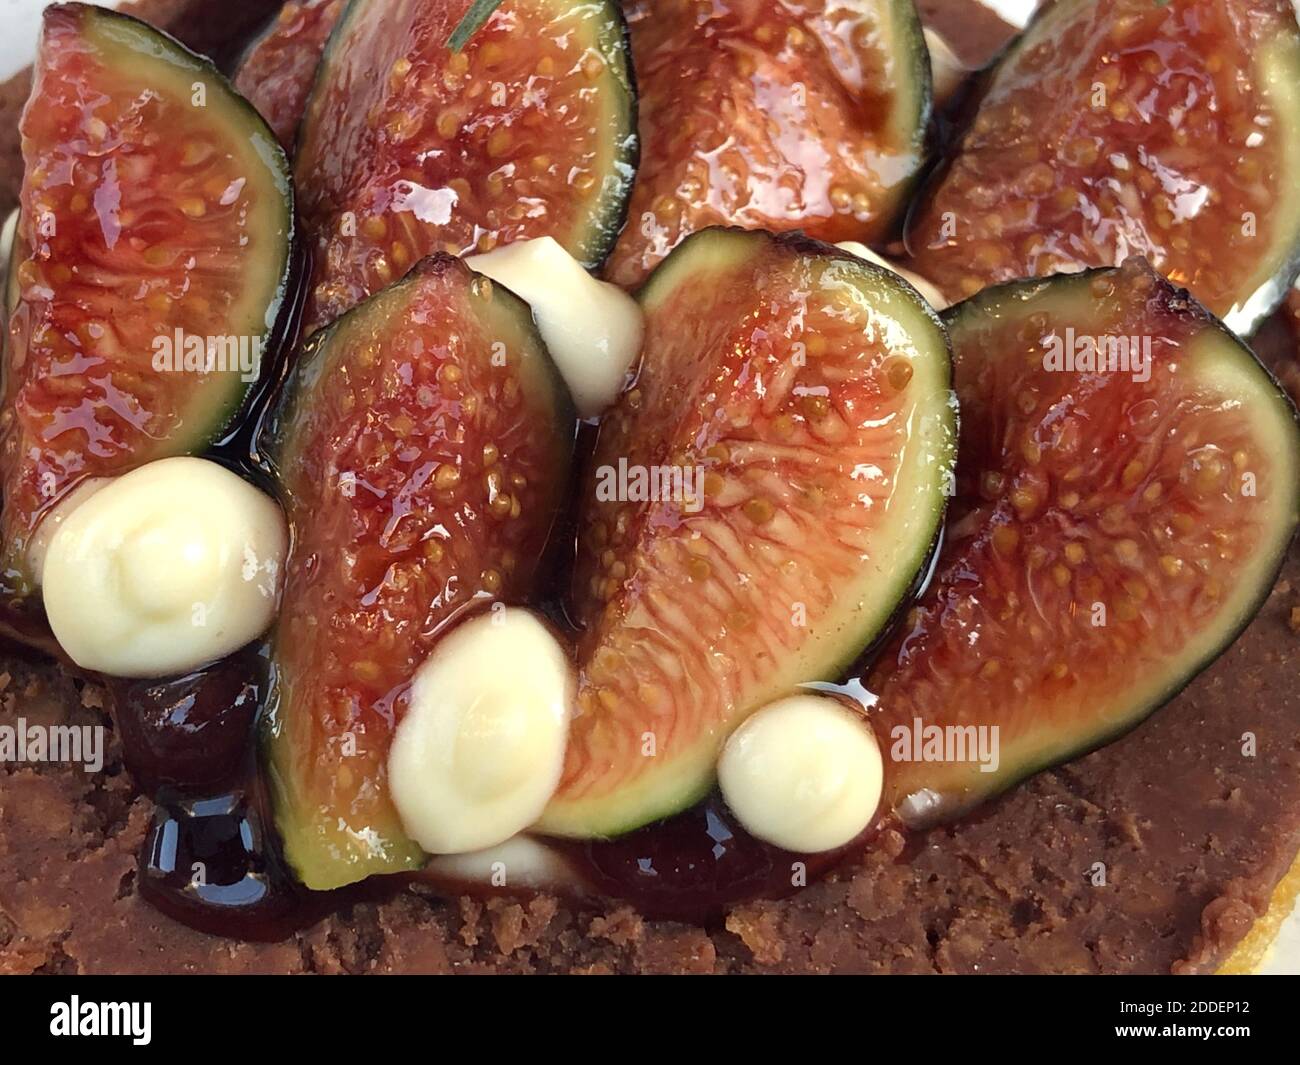 Figs and mozzarella garnish pastry/cake Stock Photo